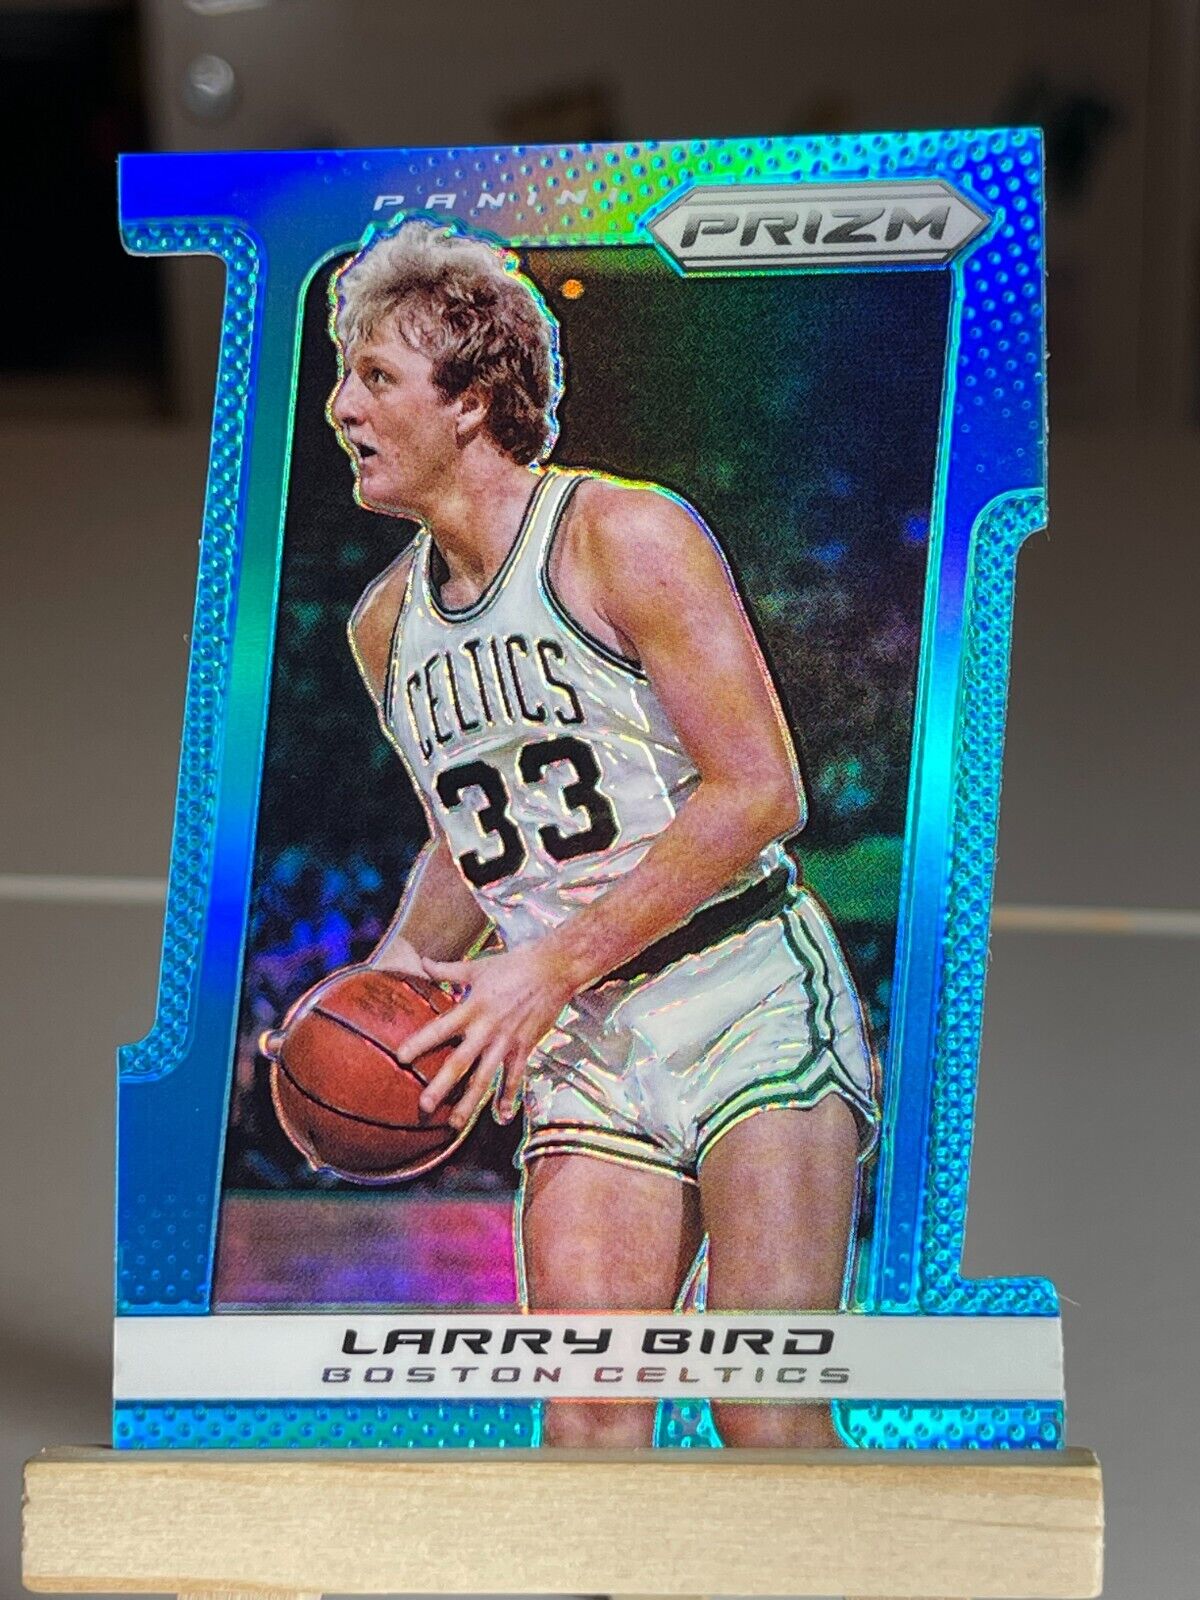 2013-14 Panini Prizm #232 Larry Bird Light Blue Prizm /199 Boston Celtics